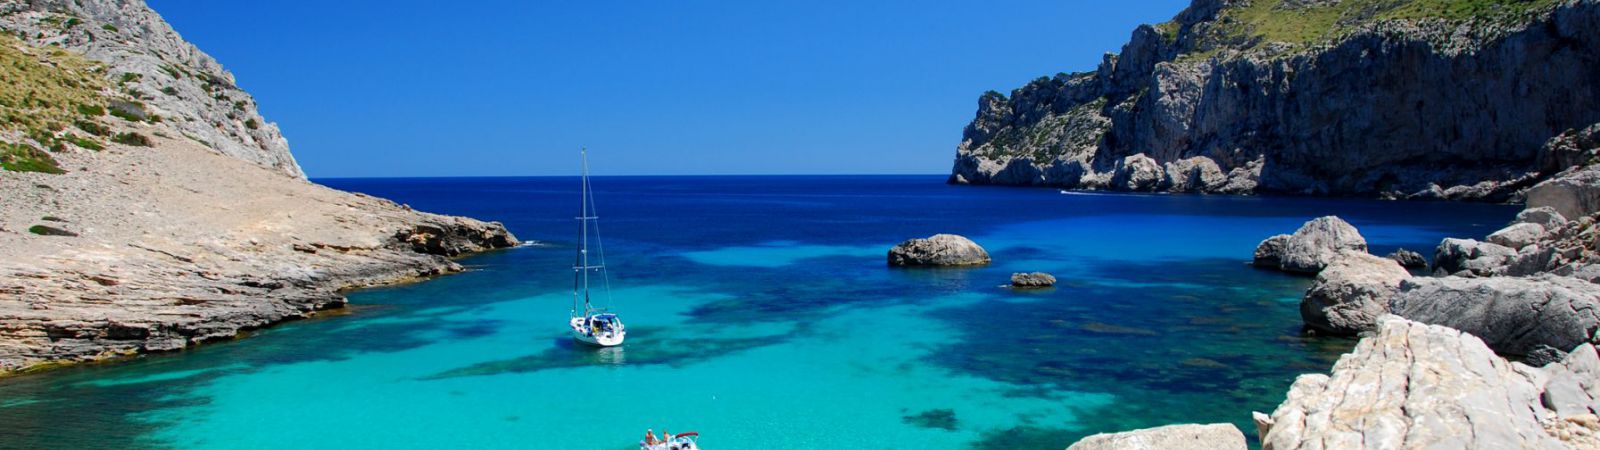 Afgelegen baai op Mallorca